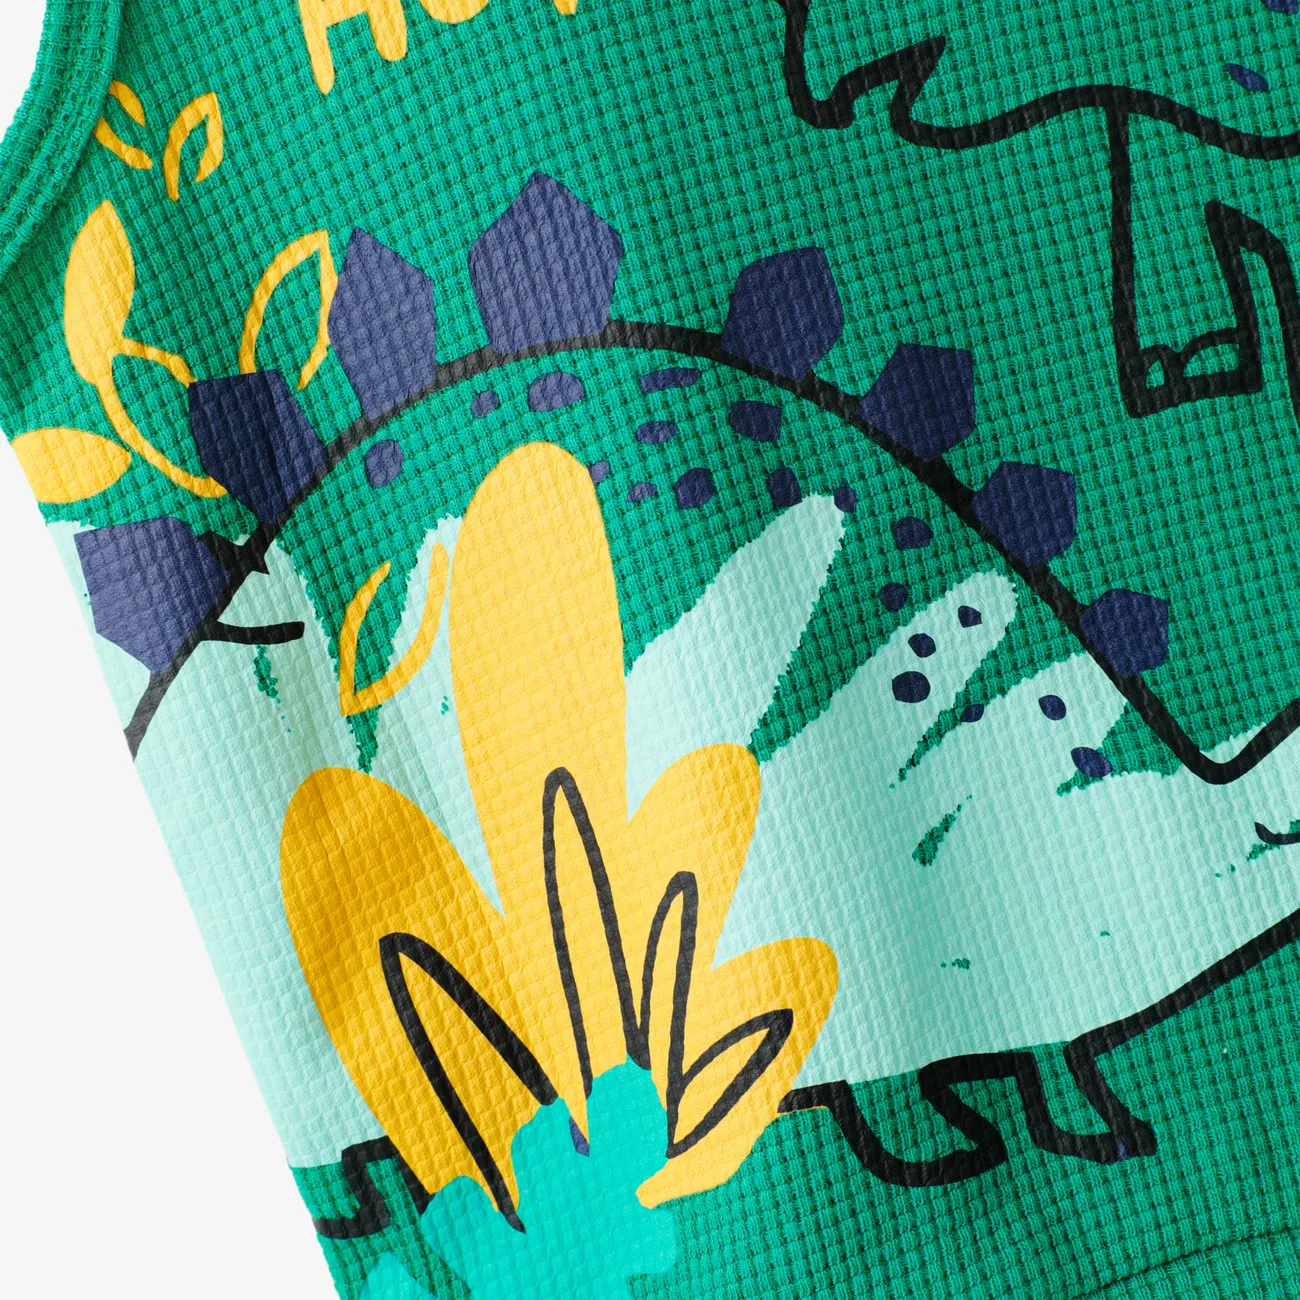 Toddler Boy 2pcs Dino Print Tank Top and Shorts Set Green big image 1